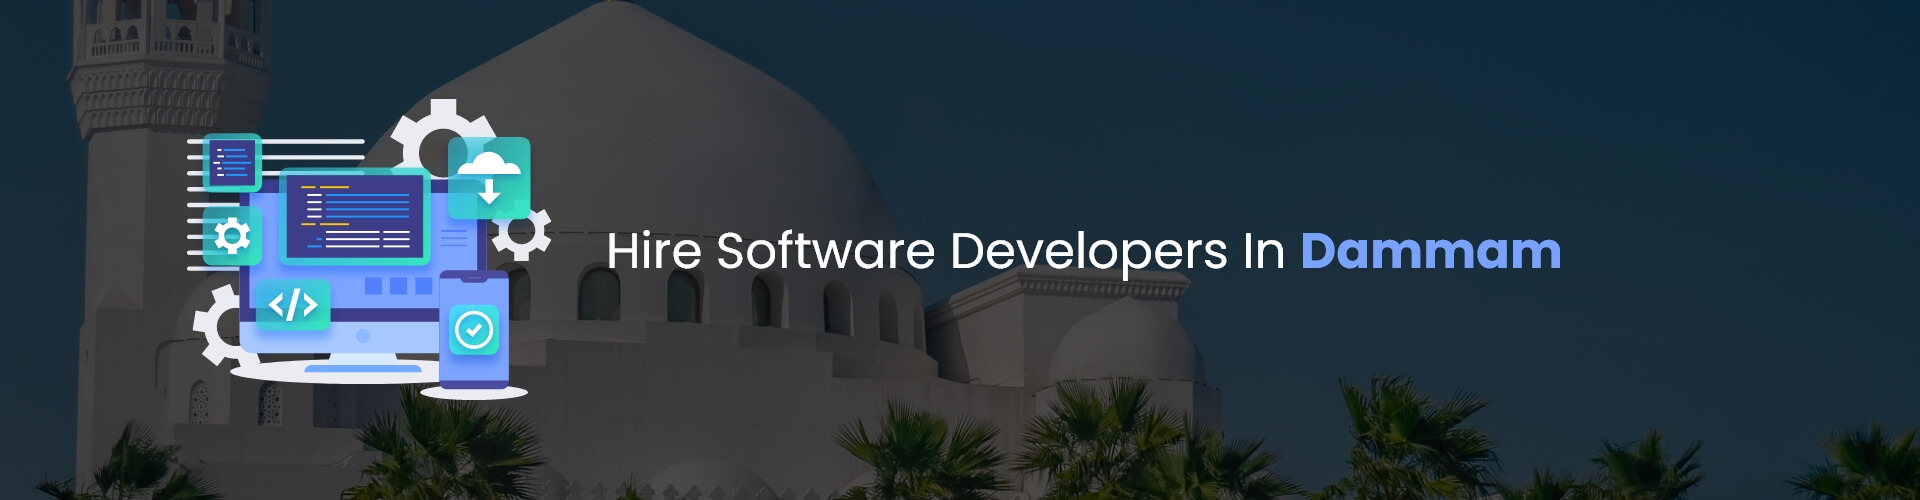 software developers in dammam